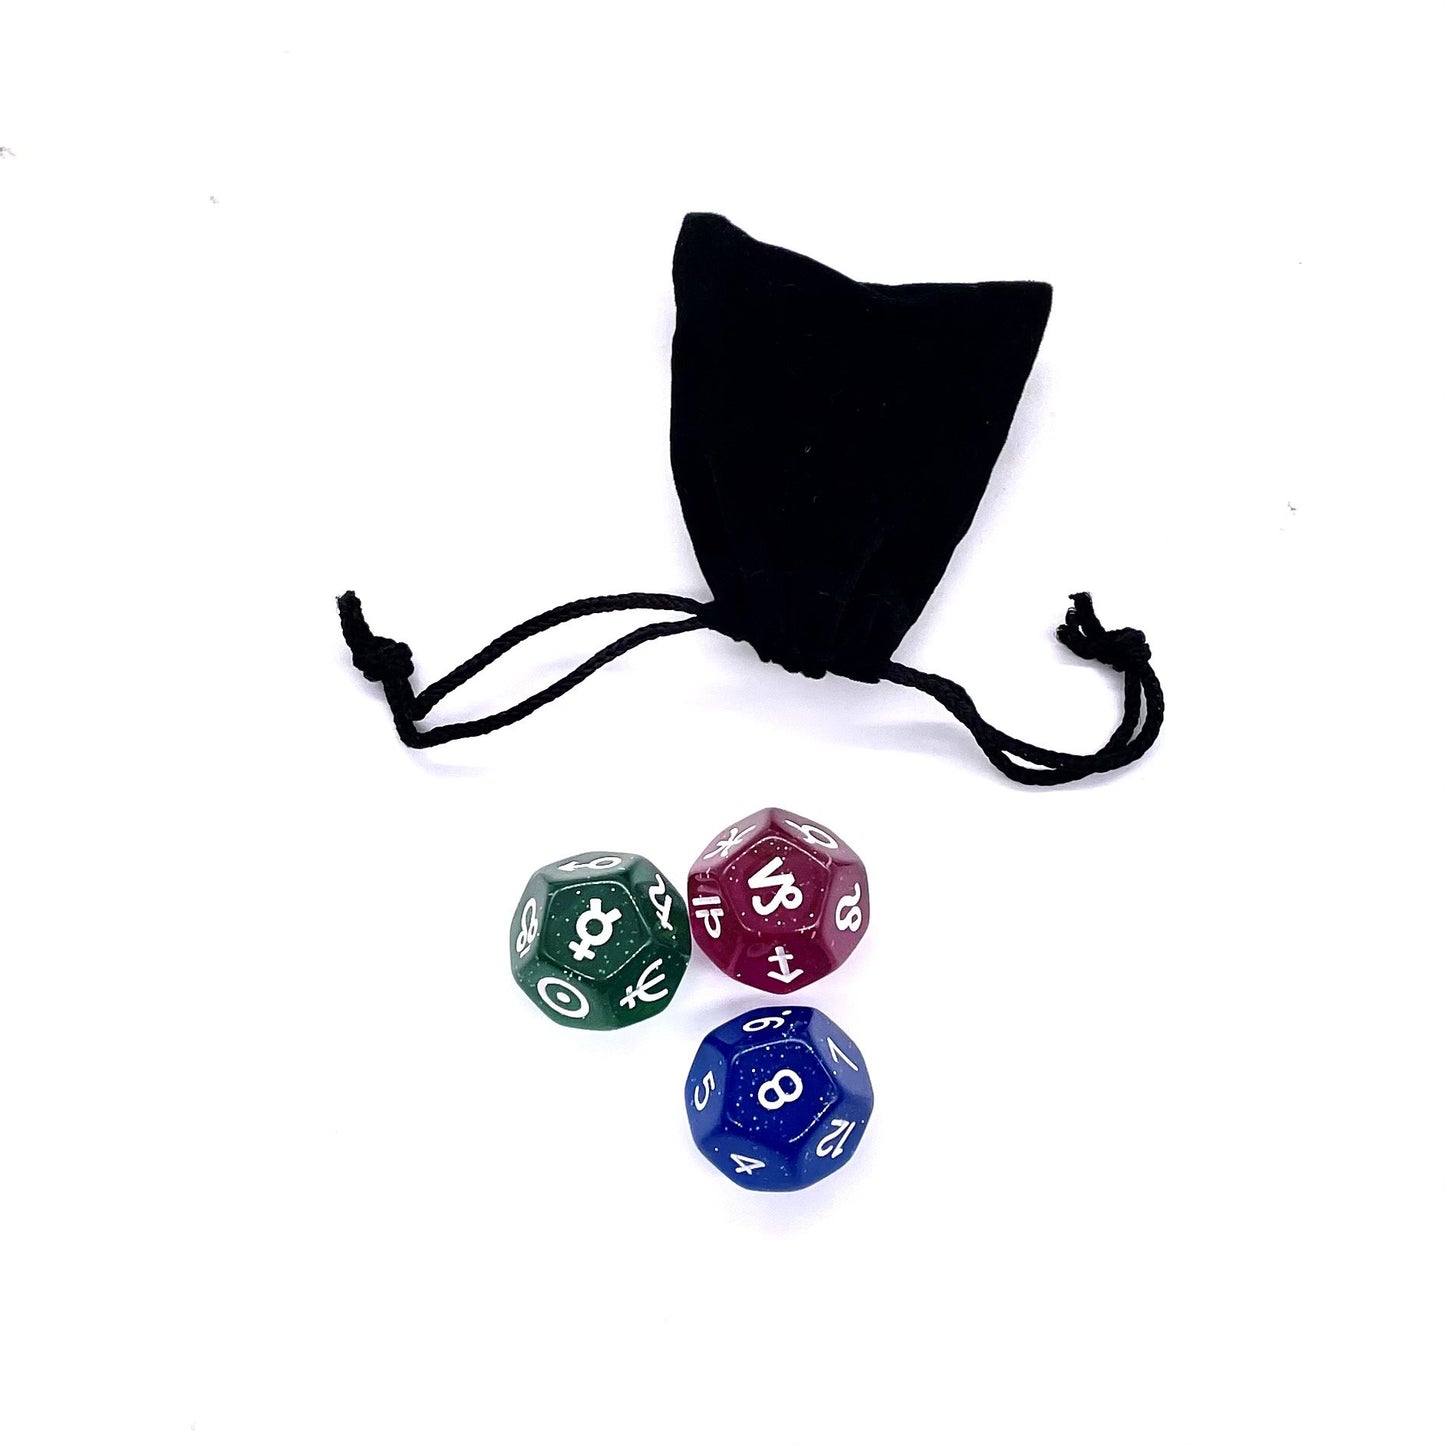 Three astro dice next to a black velvet pouch.